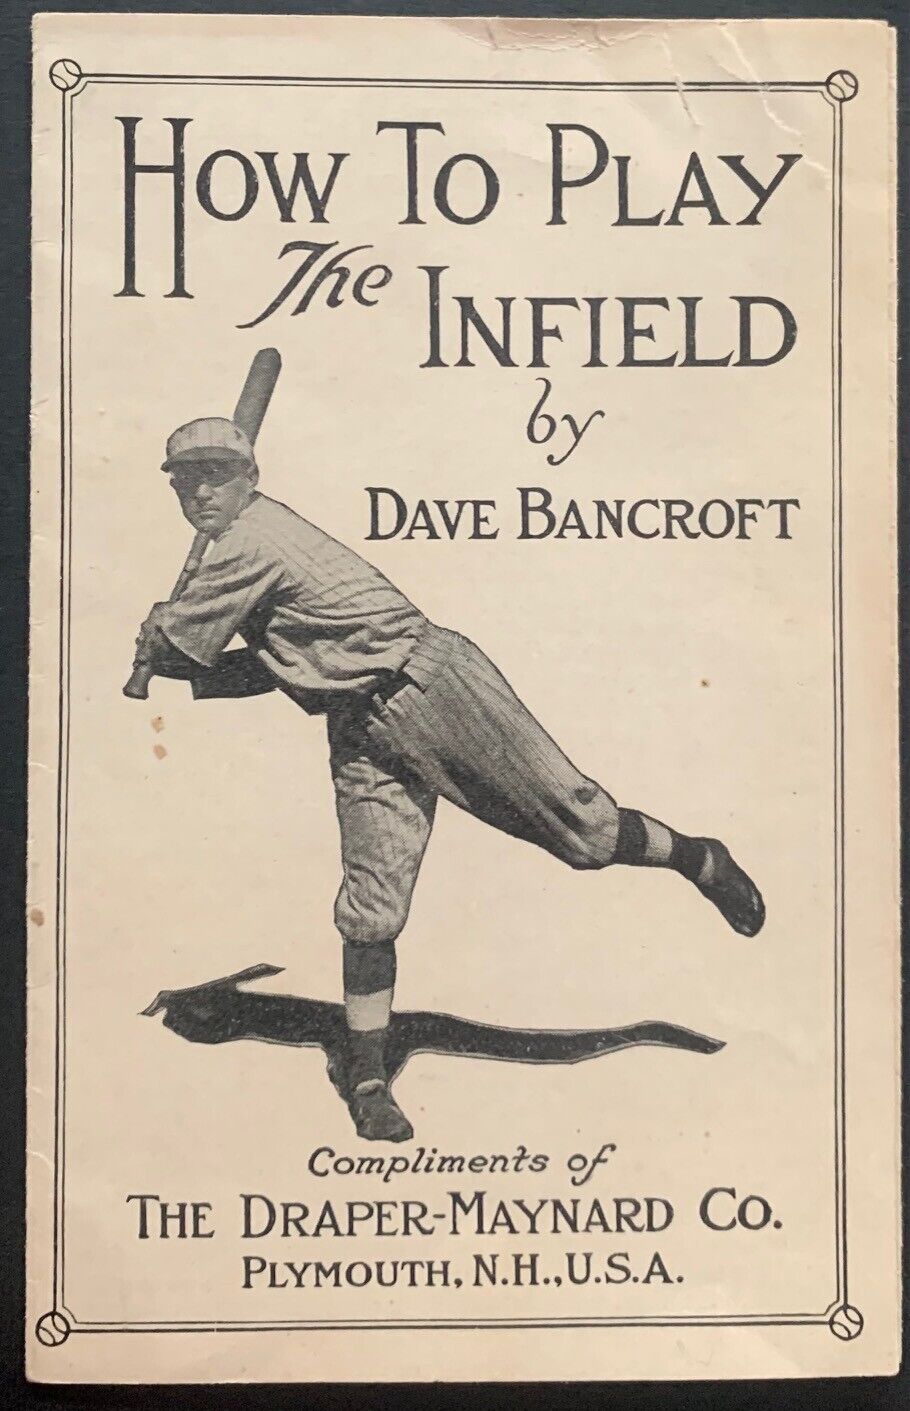 1920s Baseball How To Play The Infield Pamphlet MLB Vintage MILB Draper-Maynard